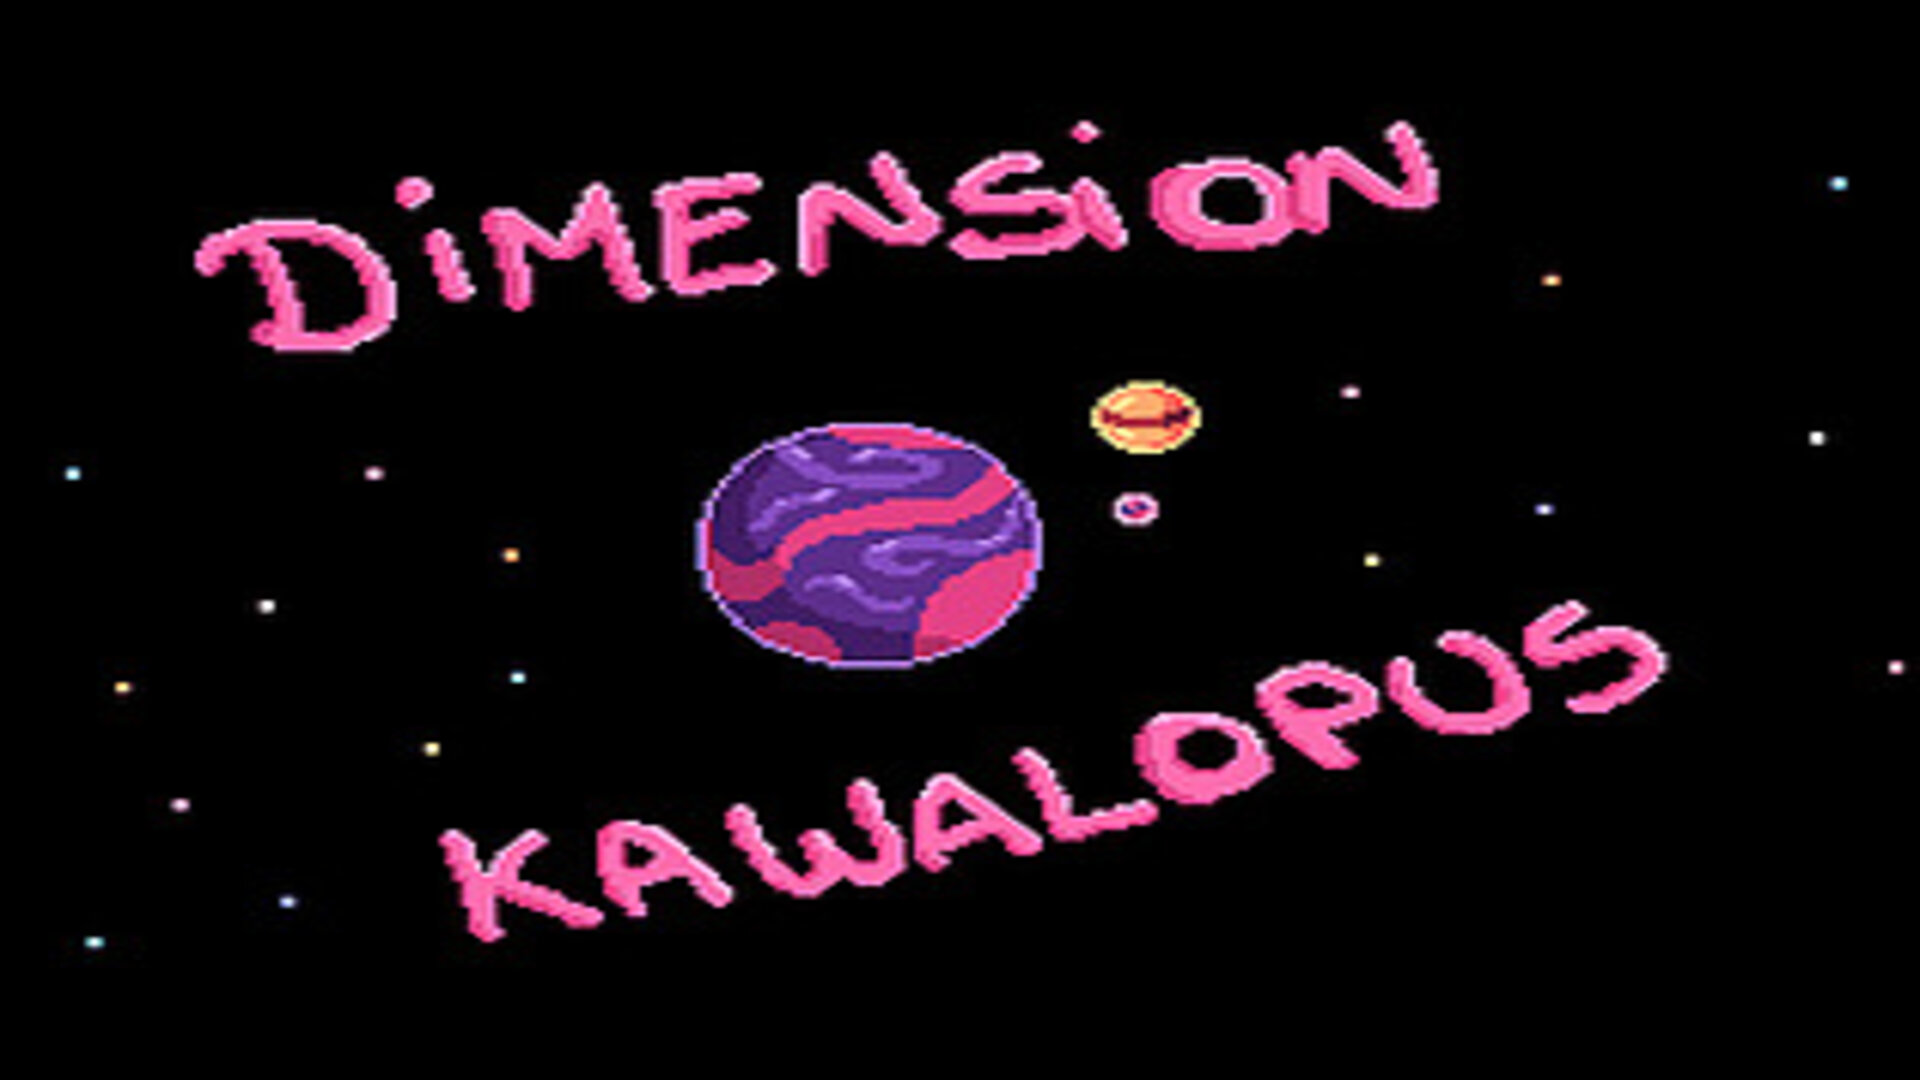 Dimension Kawalopolus